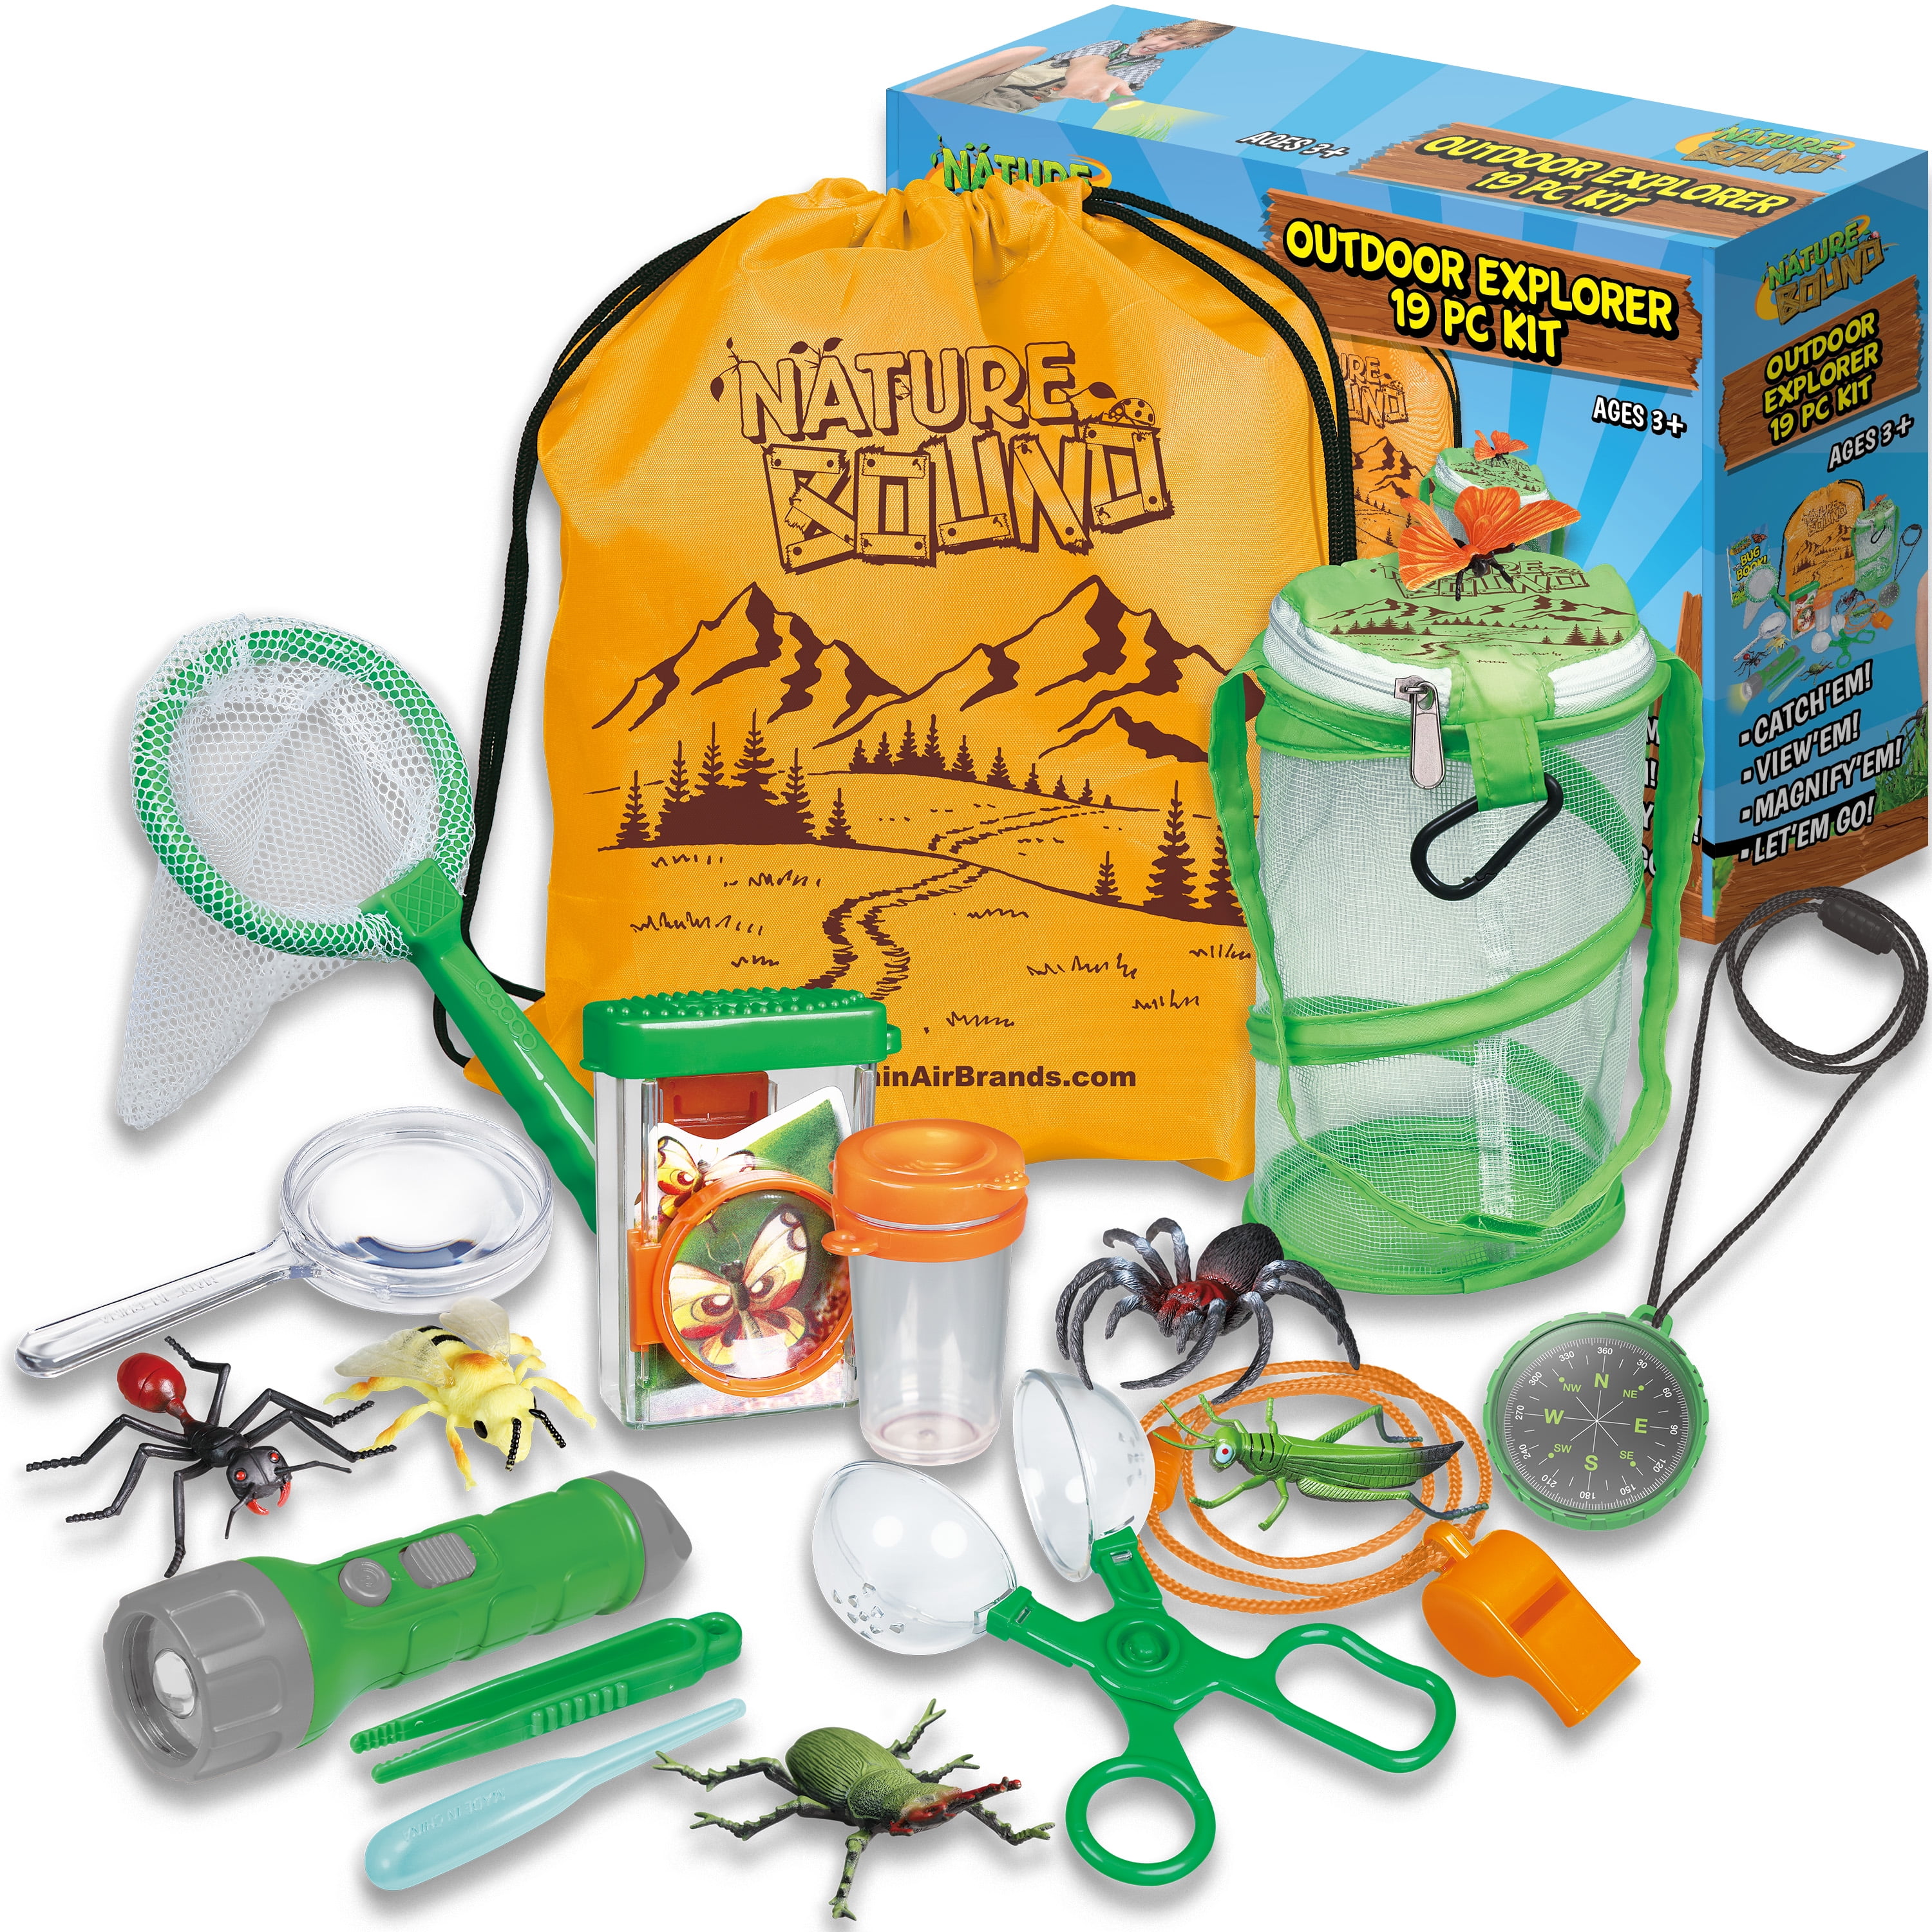 Ozark Trail 10-Piece Outdoor Explorer Kit Kids Adventure Nature Exploration Kit 